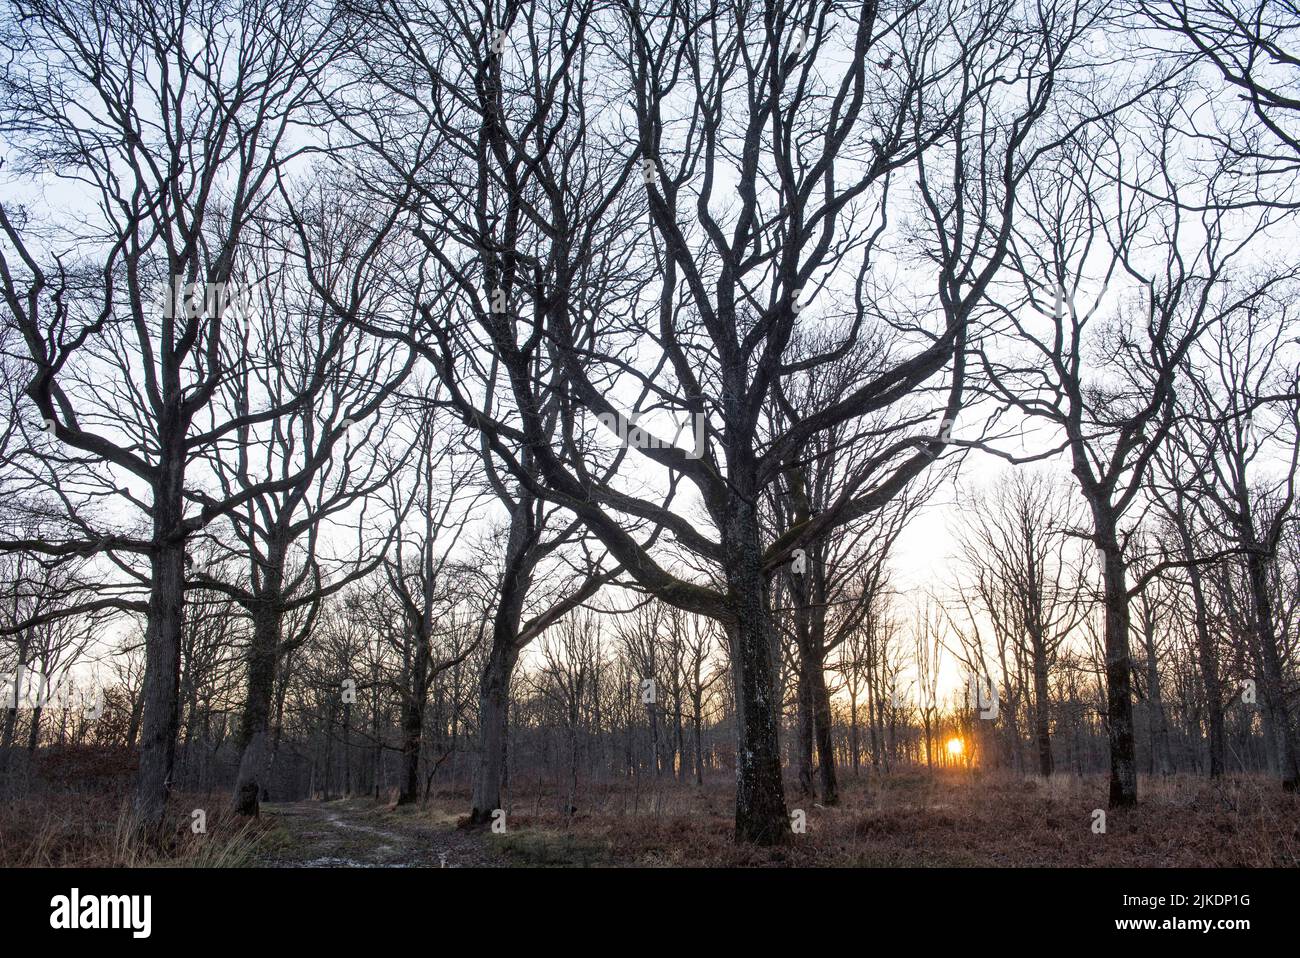 Bare oaks in winter, Forest of Rambouillet, Haute Vallee de Chevreuse Regional Natural Park, Yvelines department, Ile-de-France region, France, Stock Photo